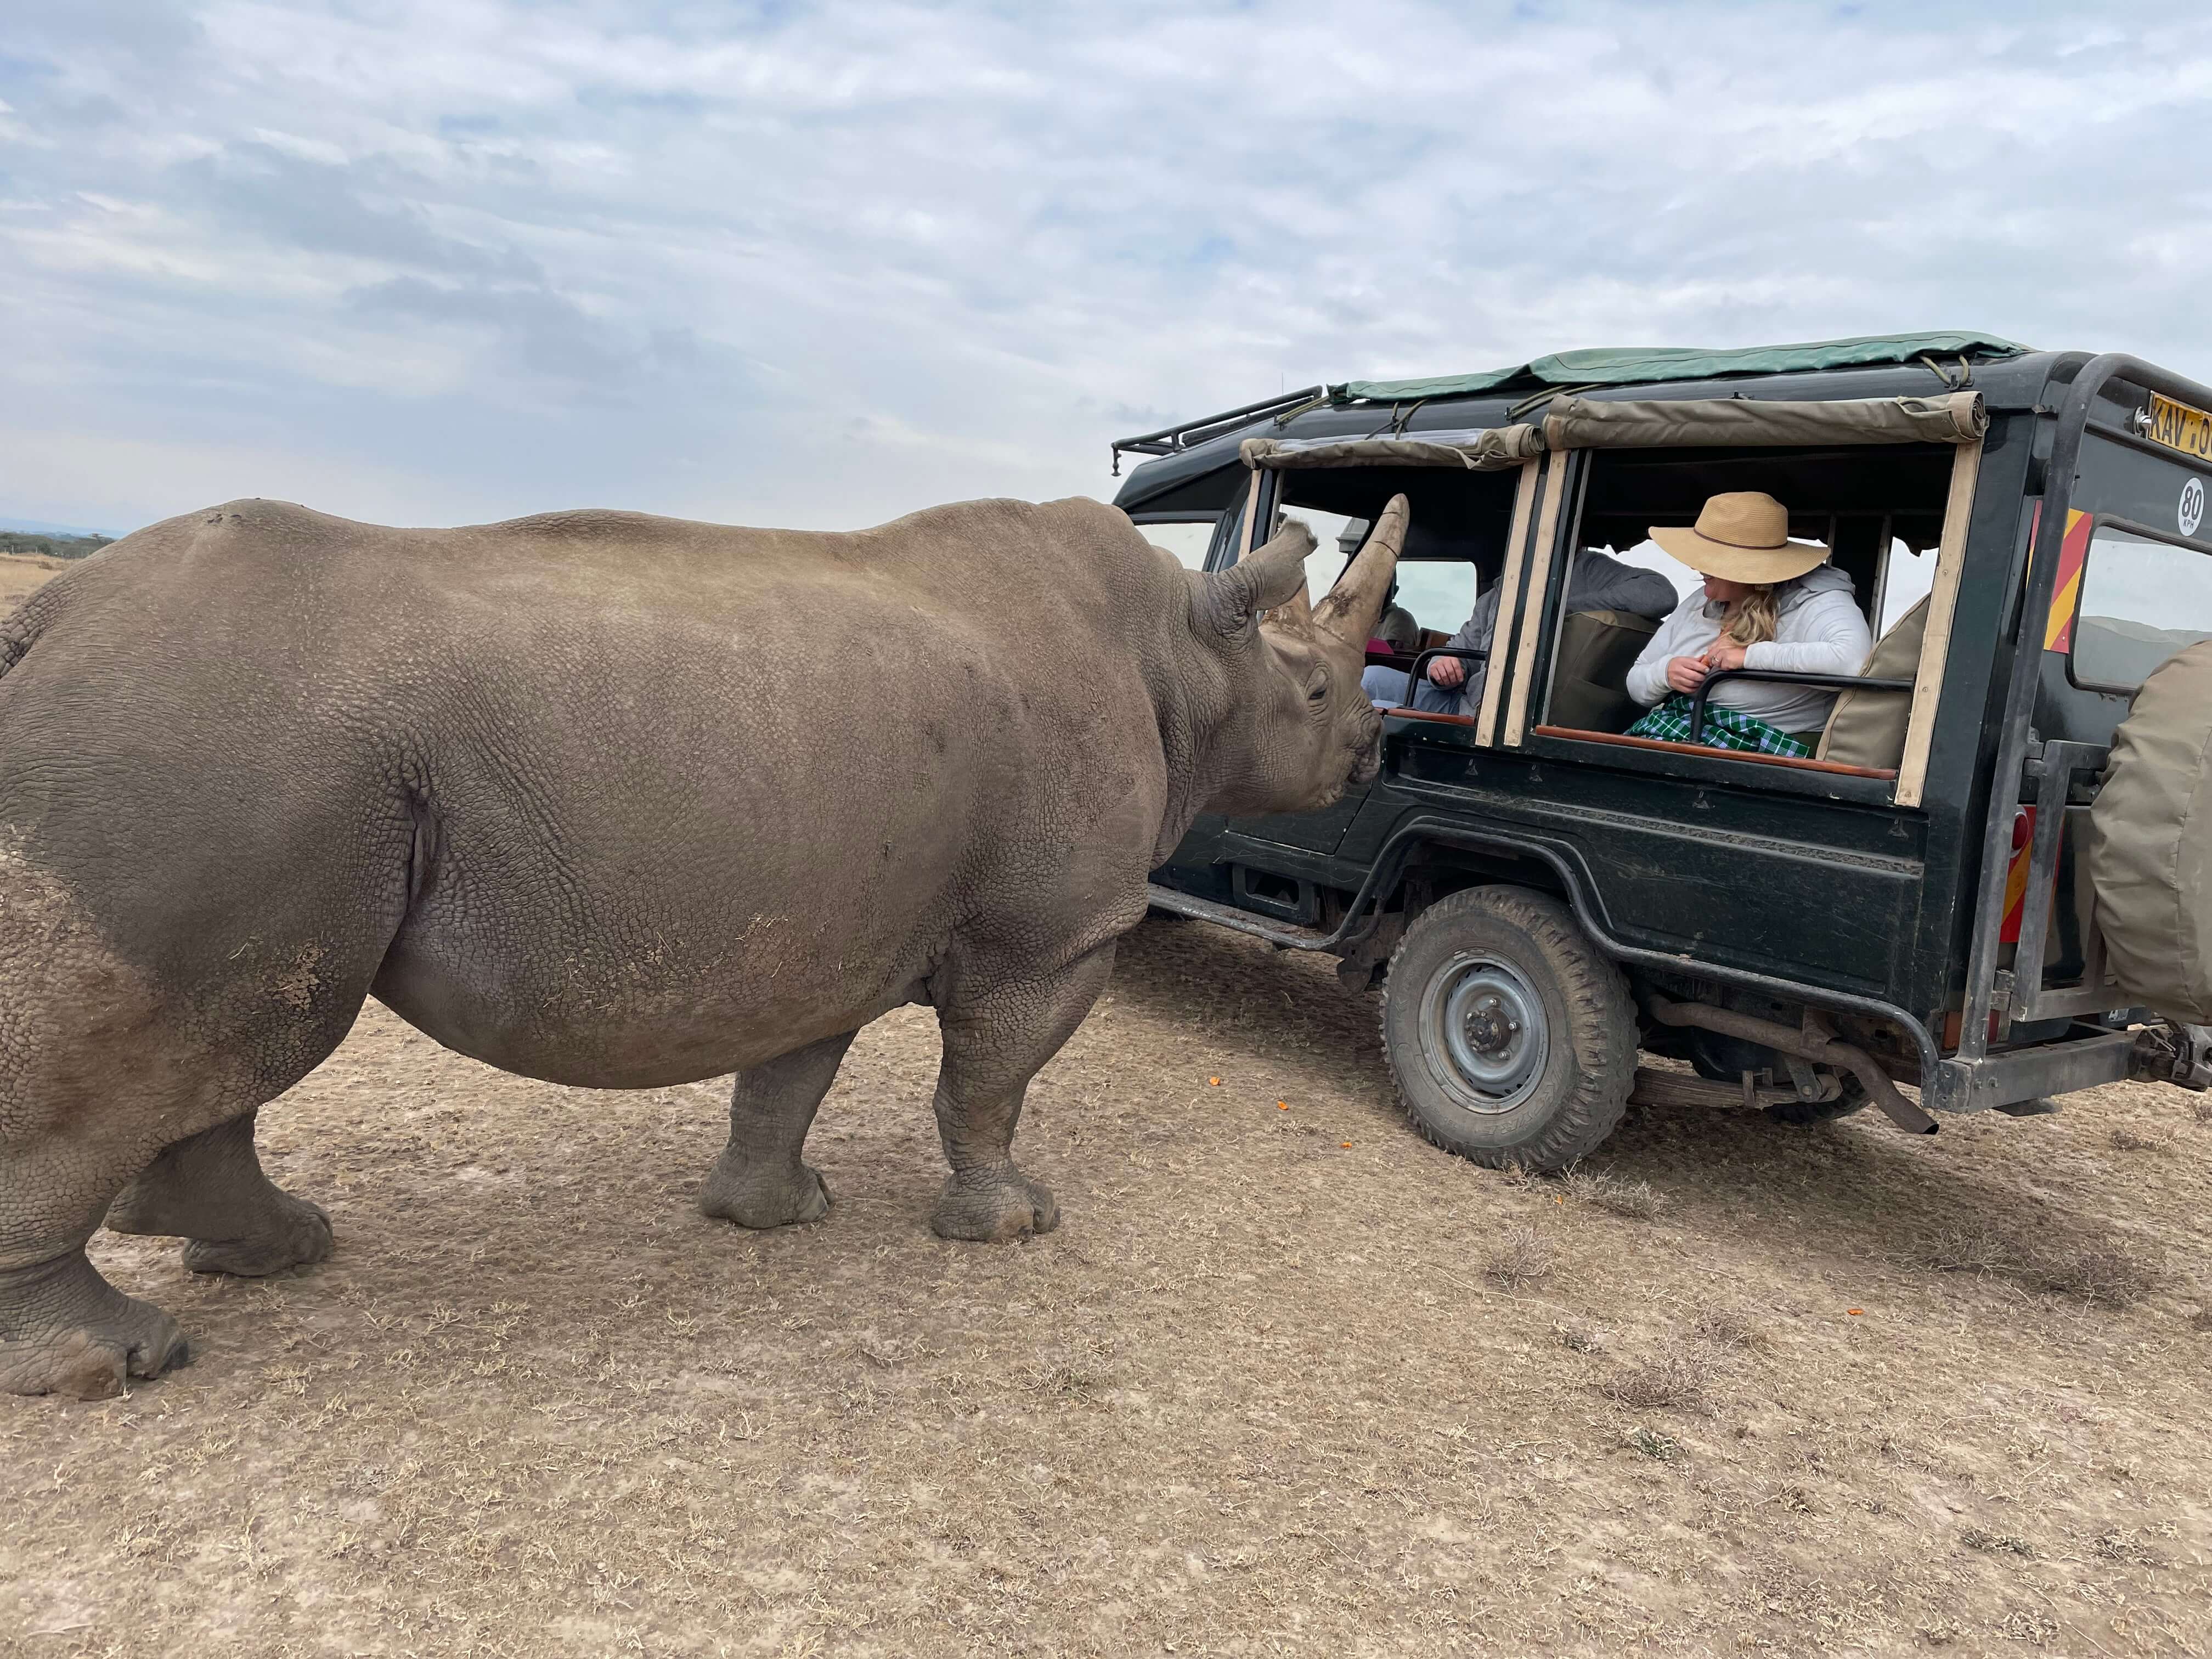 An up-close Northern White Rhino encounter